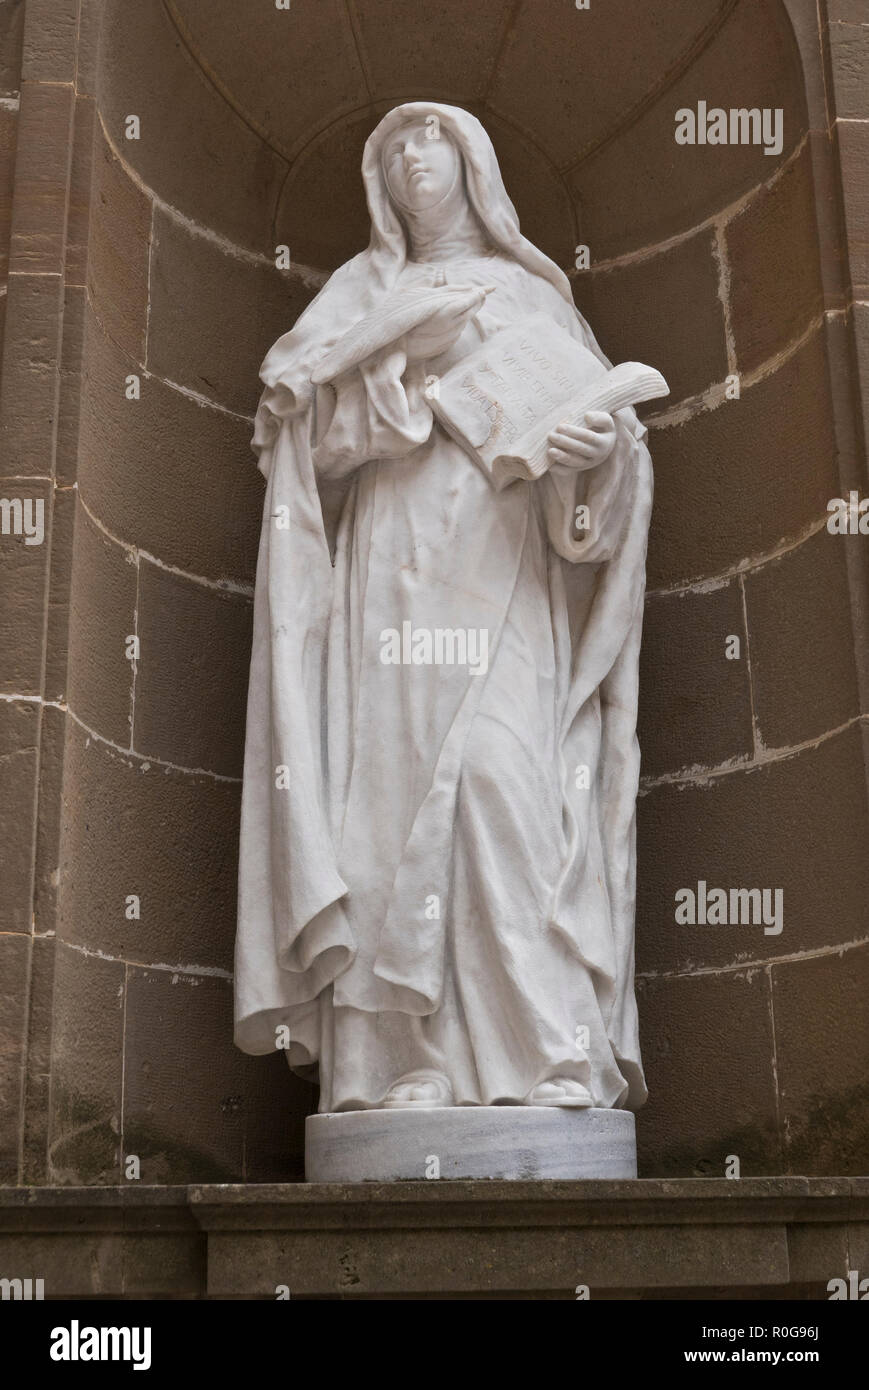 A religious statue in cloister in the courtyard at the Benedictine abbey Santa Maria de Montserrat, Barcelona, Spain Stock Photo